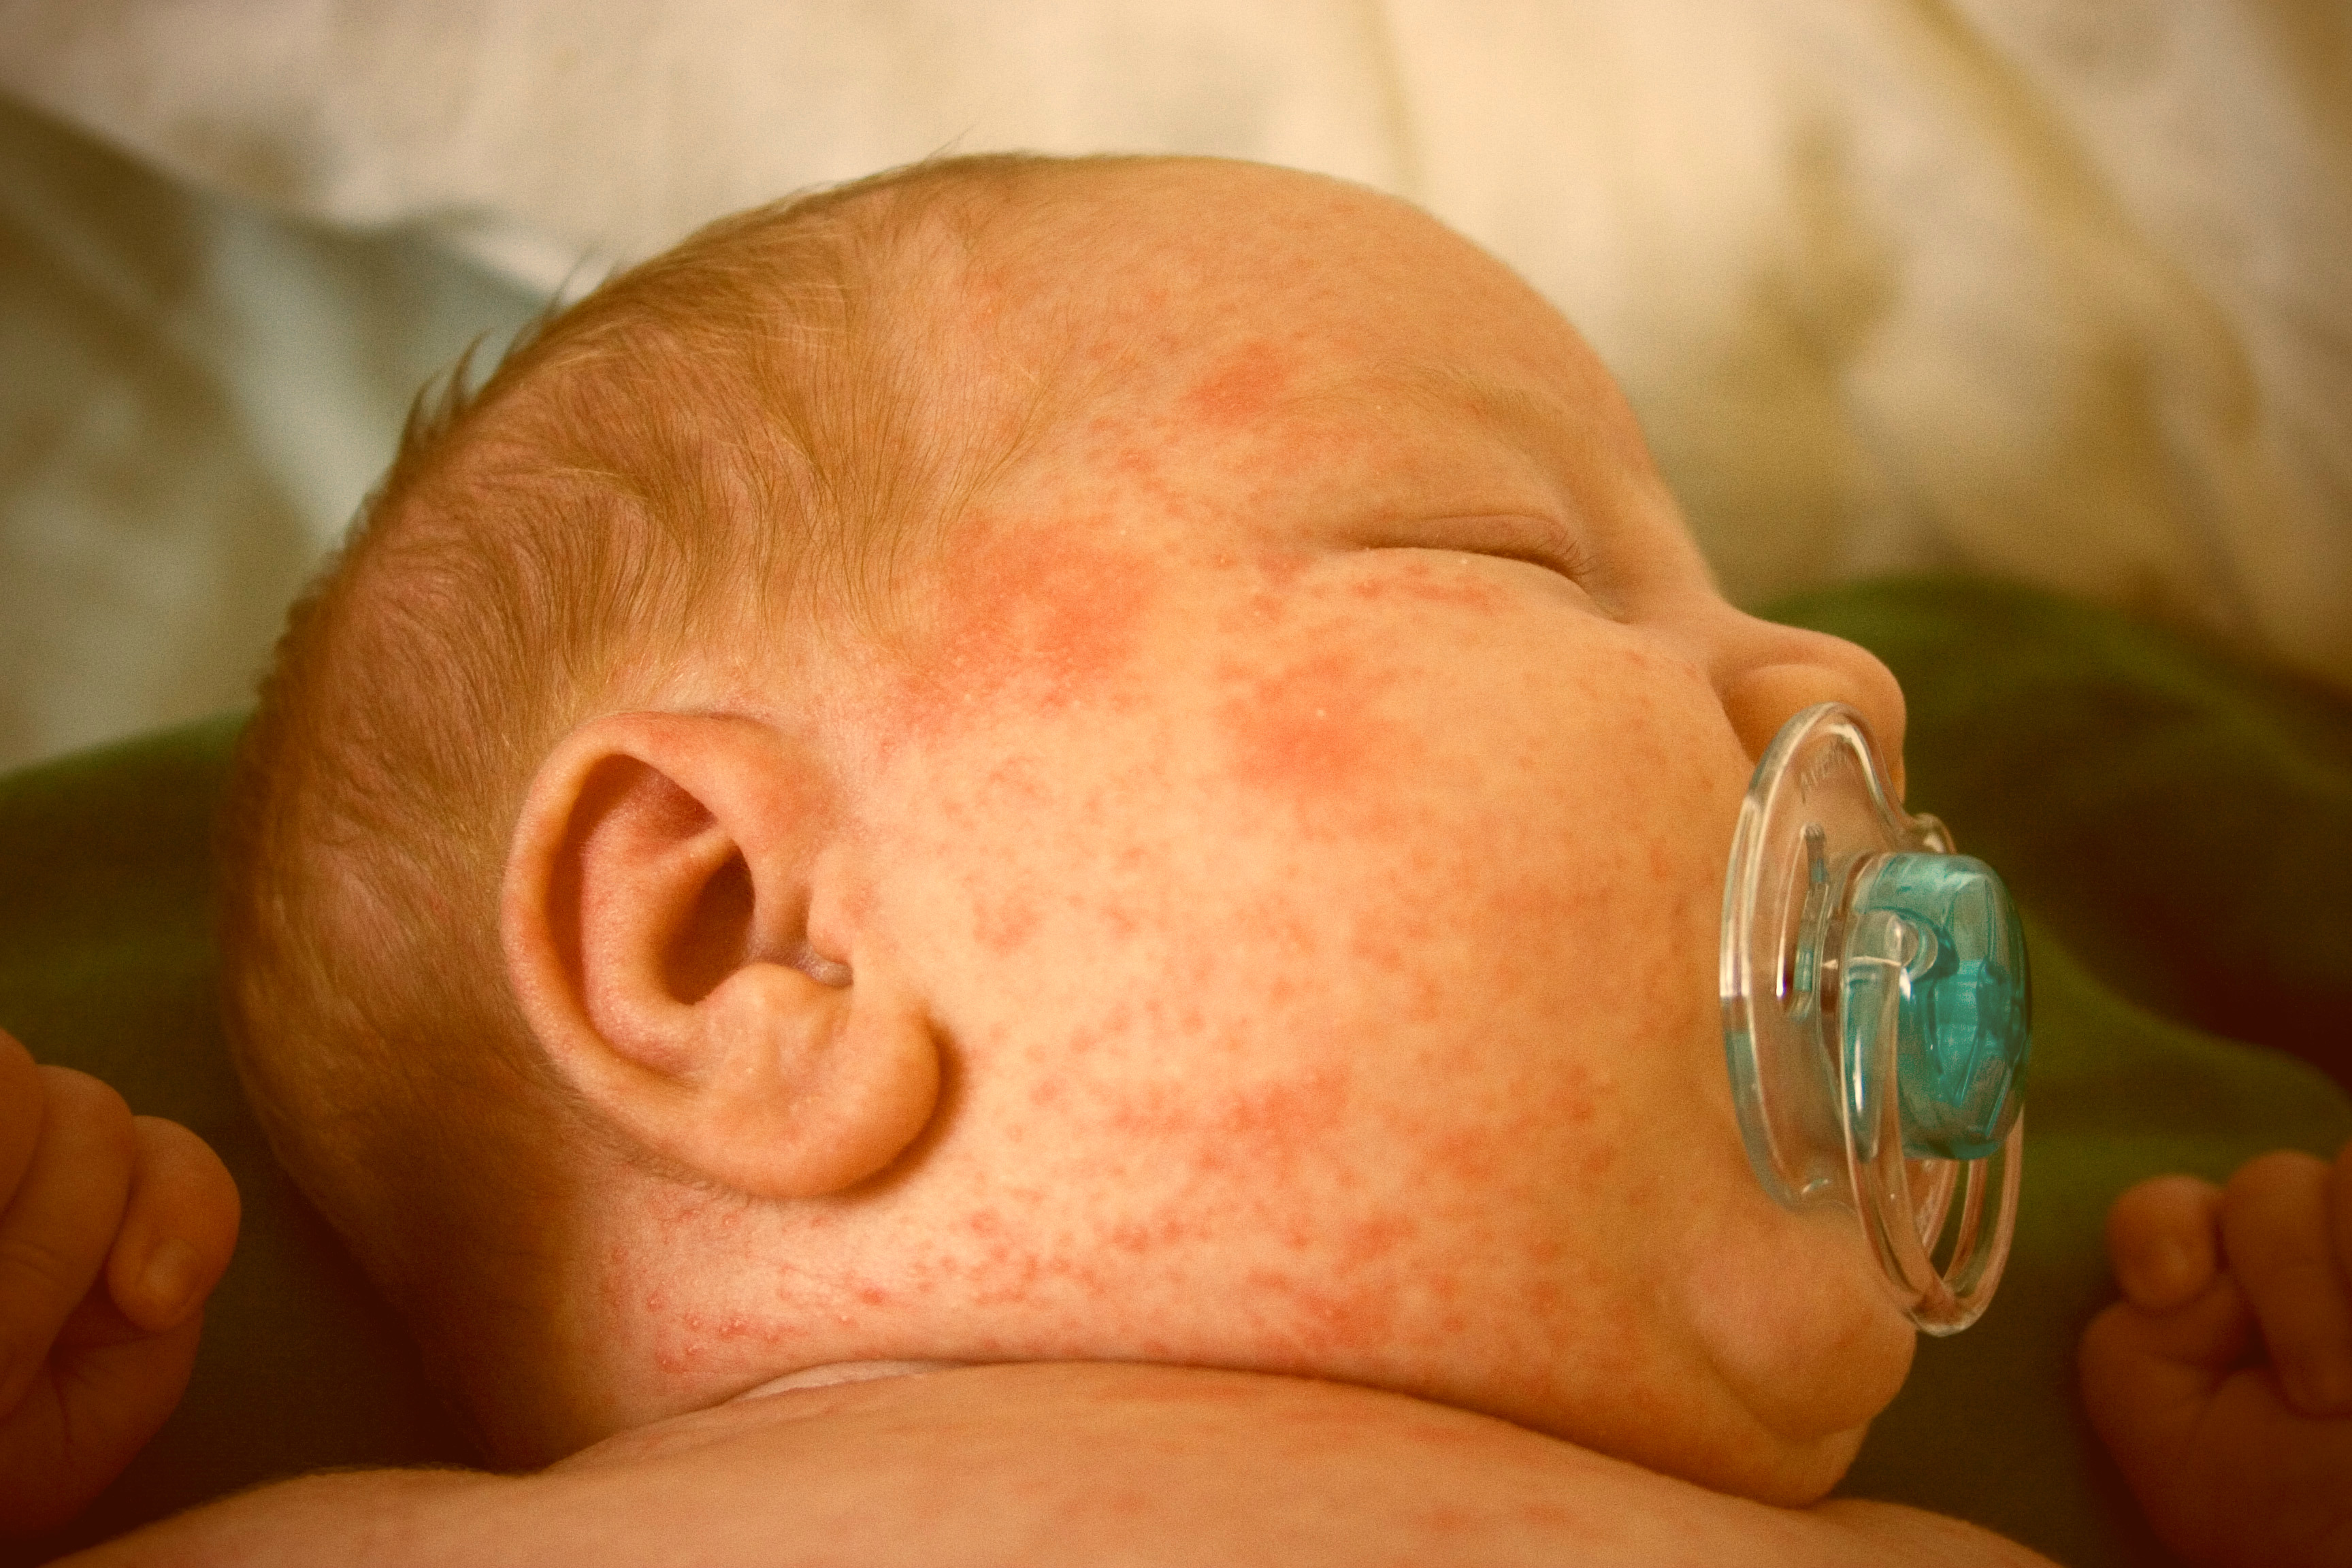 heat rash on infant #10